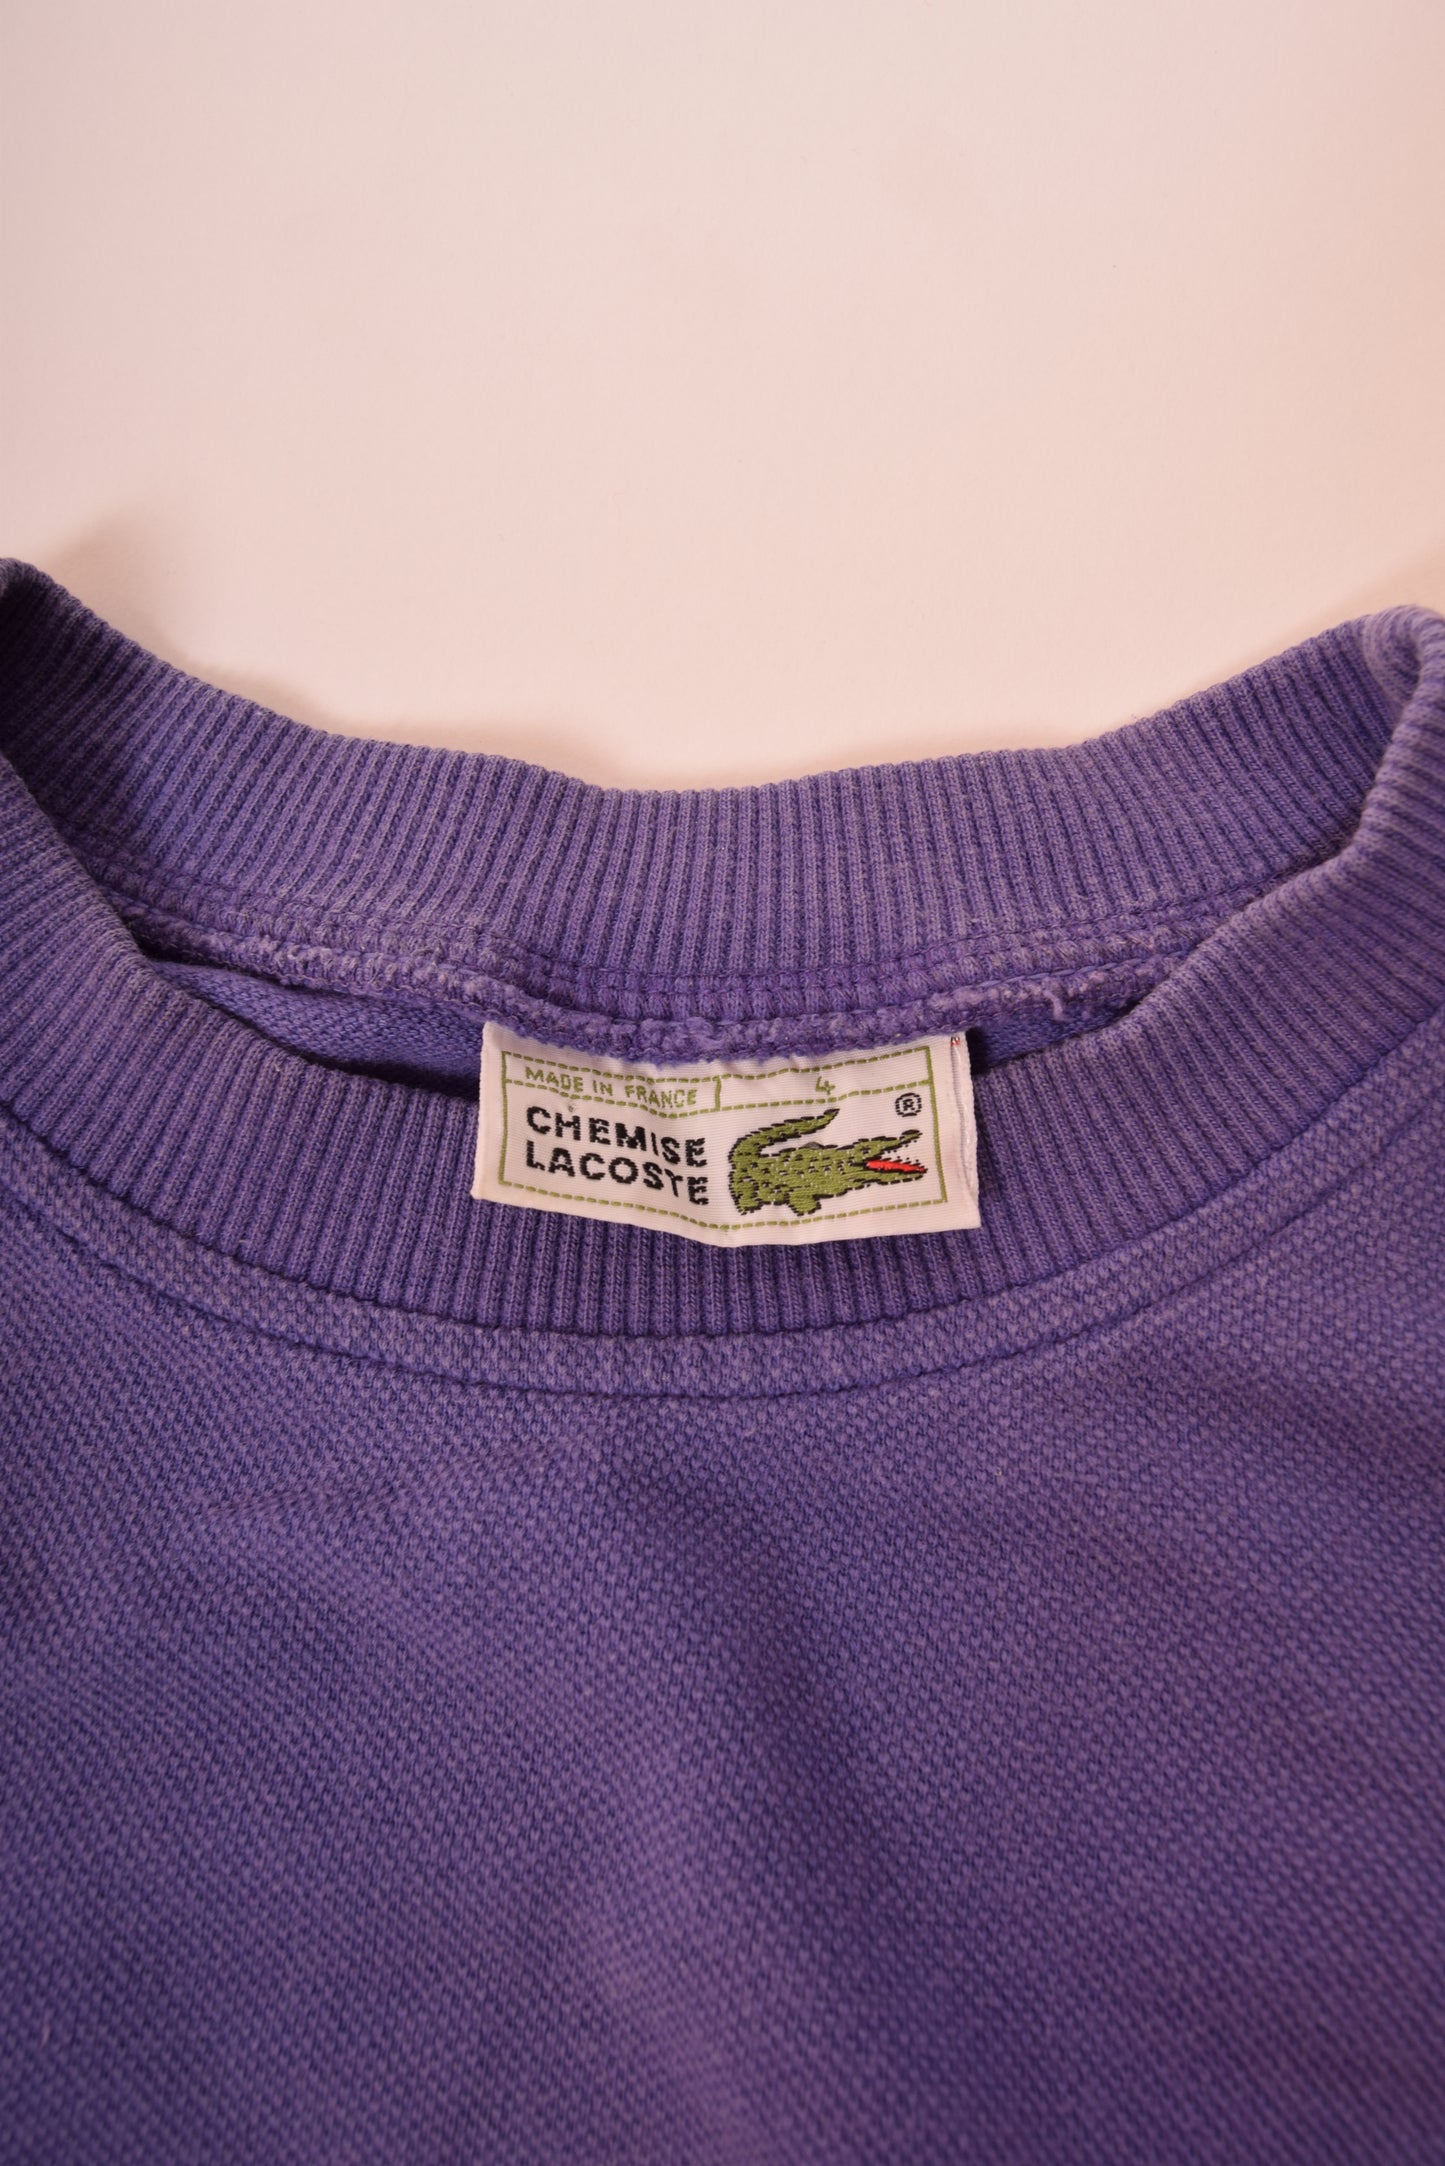 Vintage Lacoste Sweatshirt 80's Made in France Golf Purple 